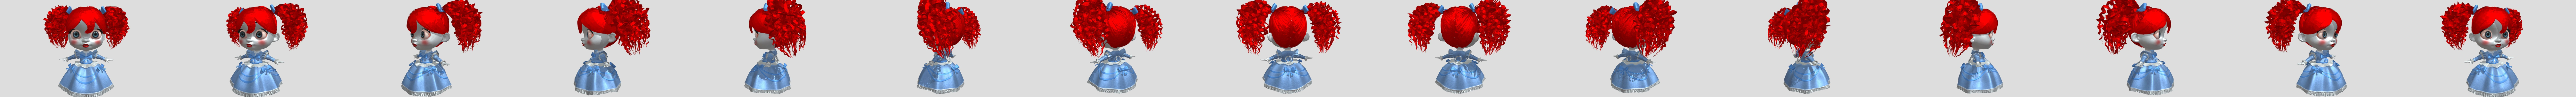 Poppy Playtime  Poppy - Download Free 3D model by Xoffly (@Xoffly)  [52f0d02]